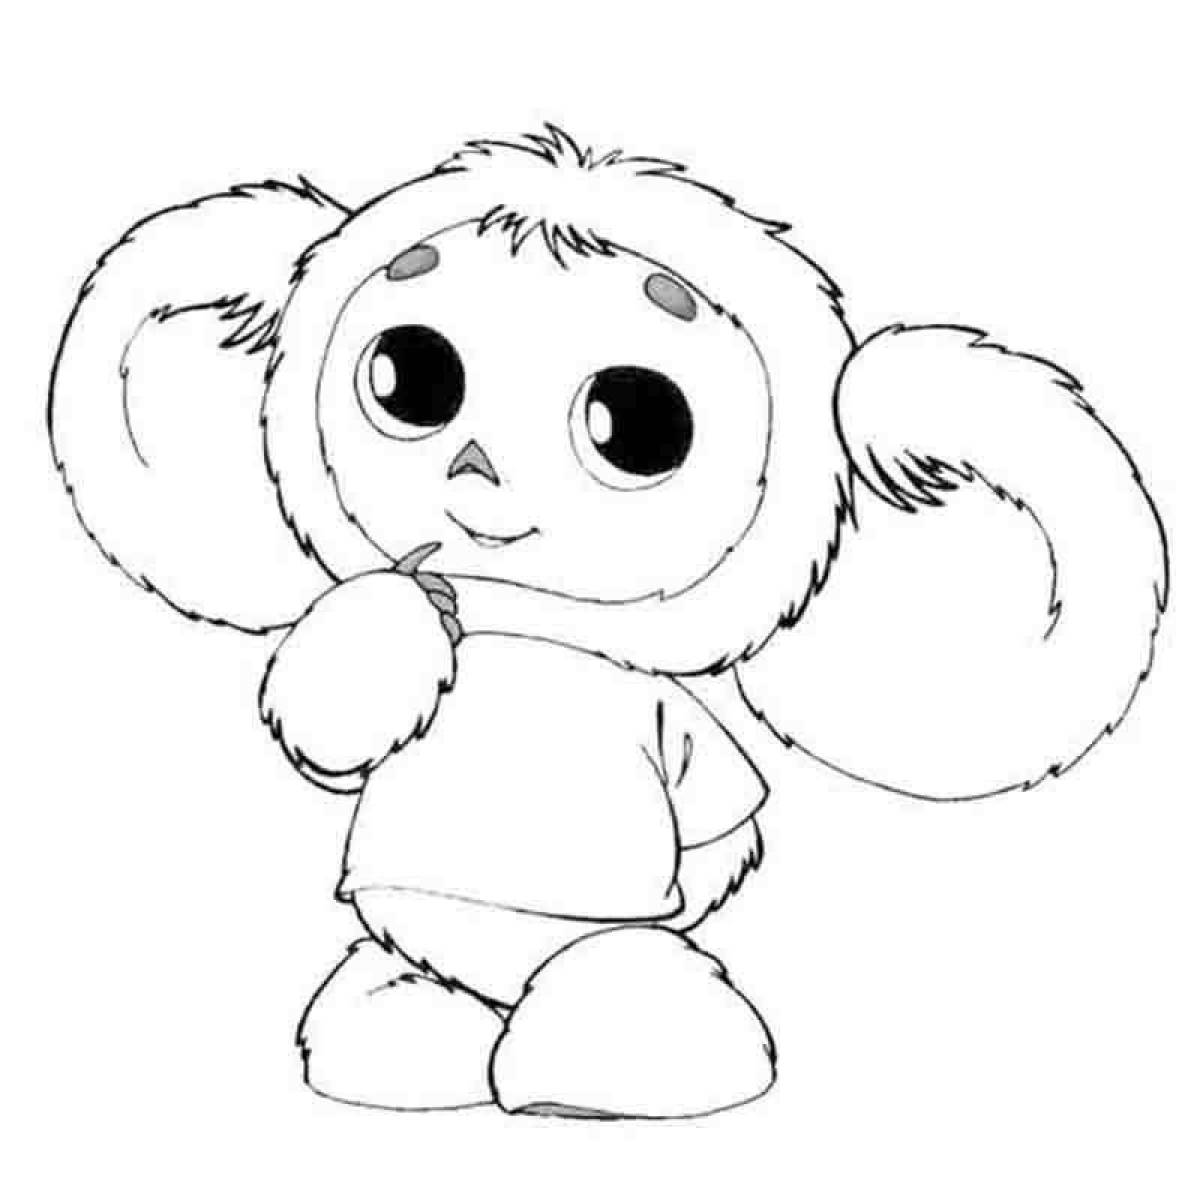 Merry coloring Cheburashka for kids